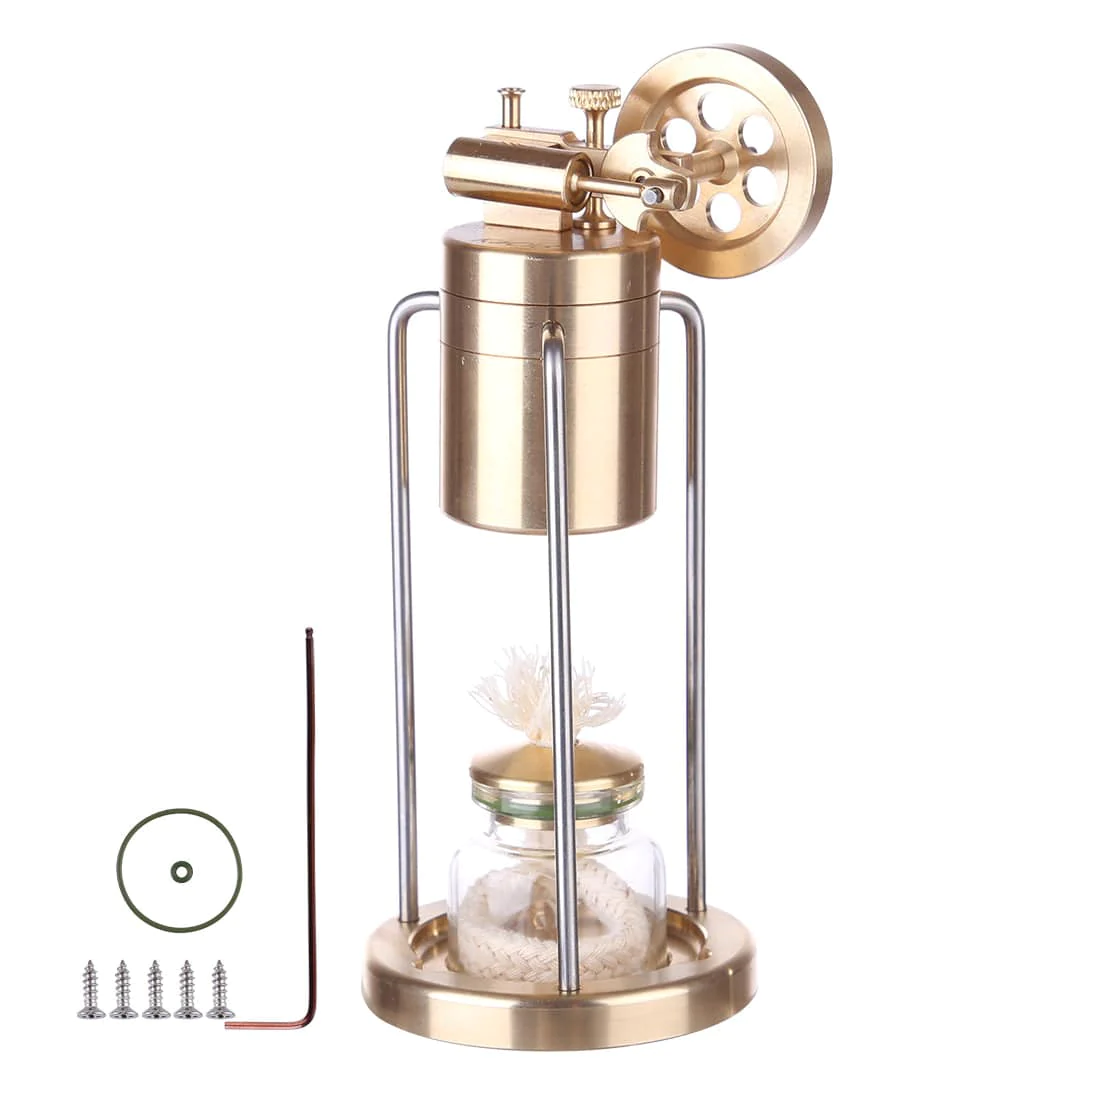 Microcosm Mini Live Steam Engine Brass Stirling Engine Model Science Education 1